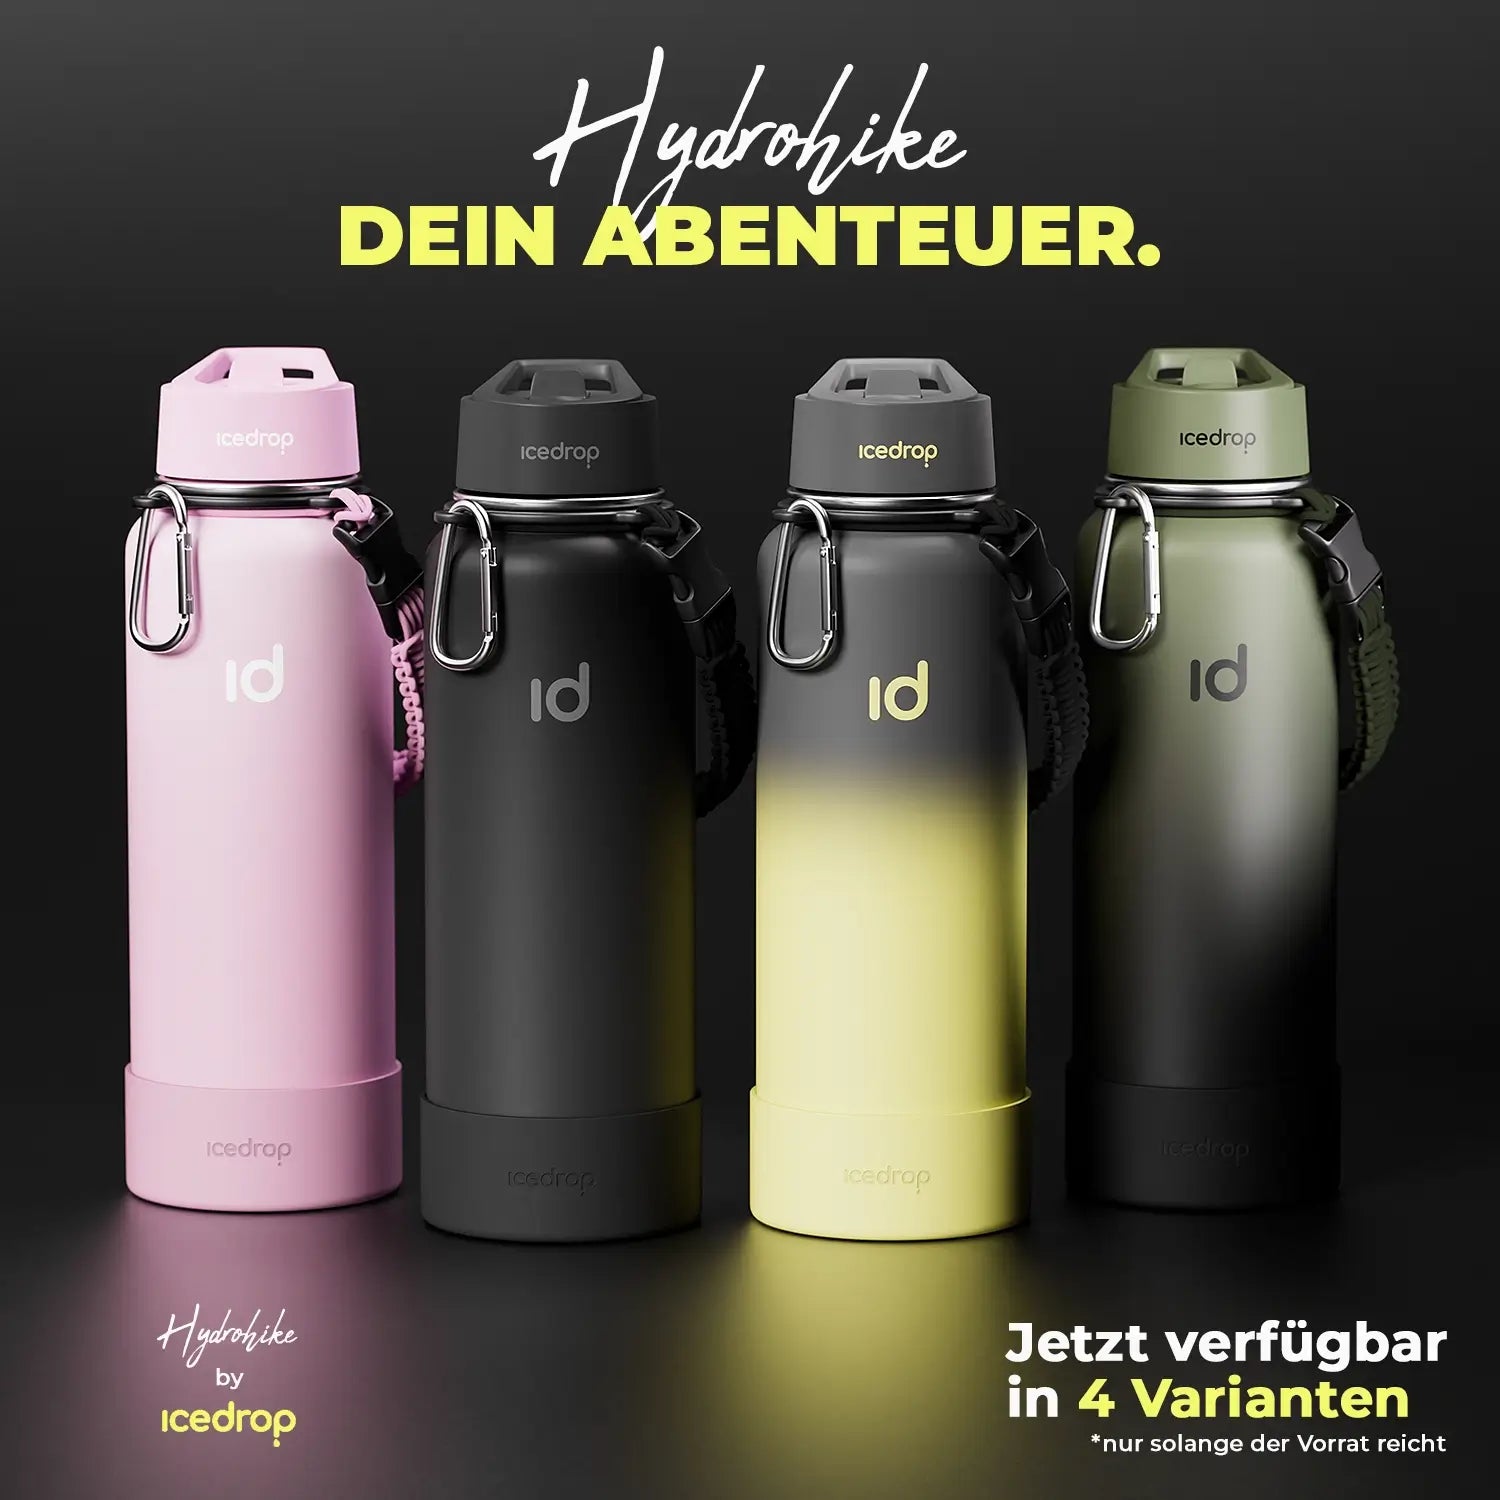 Fullstack Bundle | Thermonator 2.0 & Hydrohike Trinkflasche